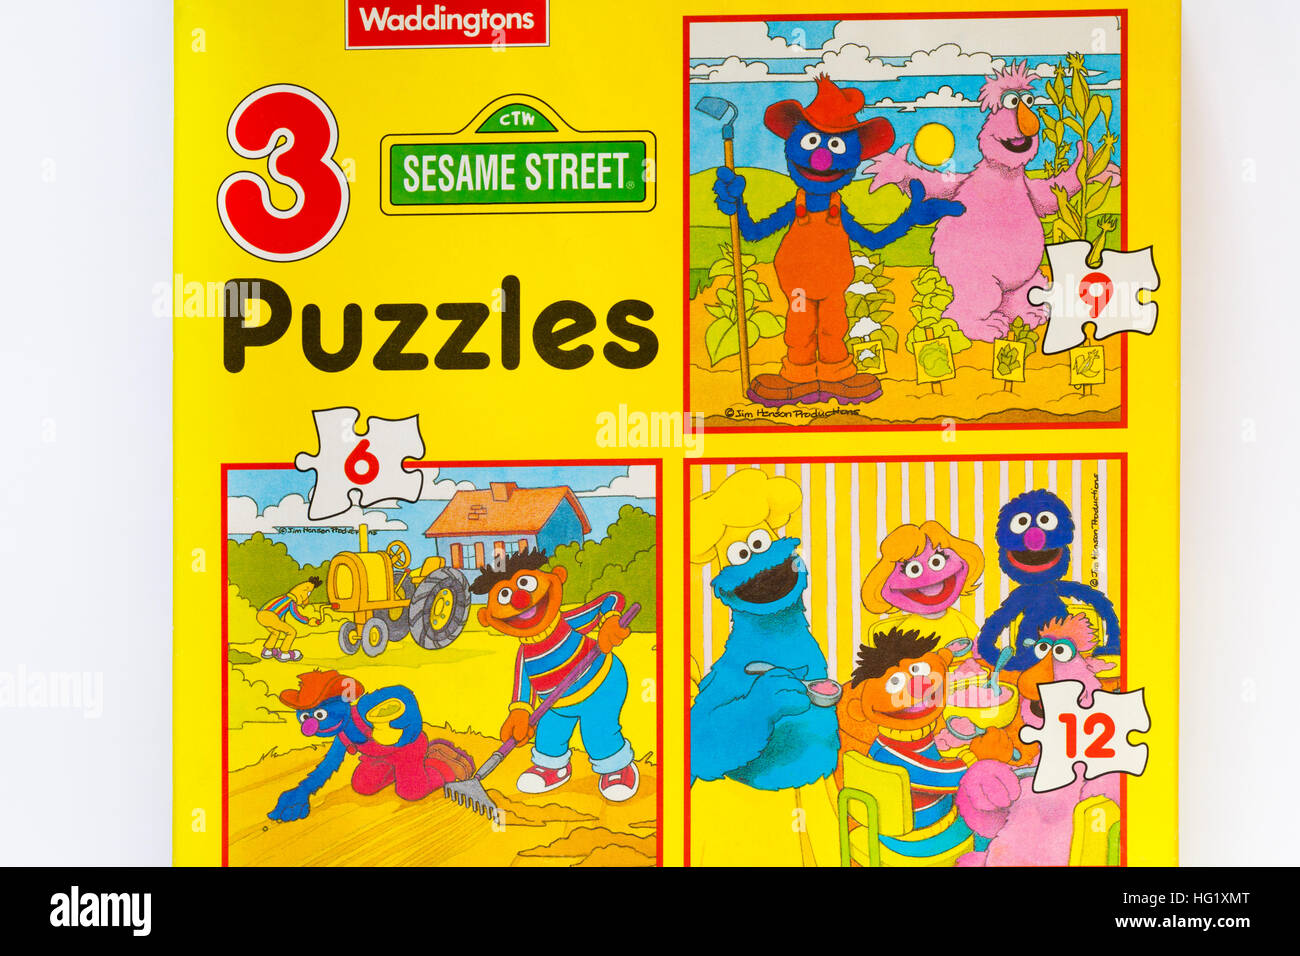 3 Sesame Street puzzles by Waddingtons Stock Photo - Alamy